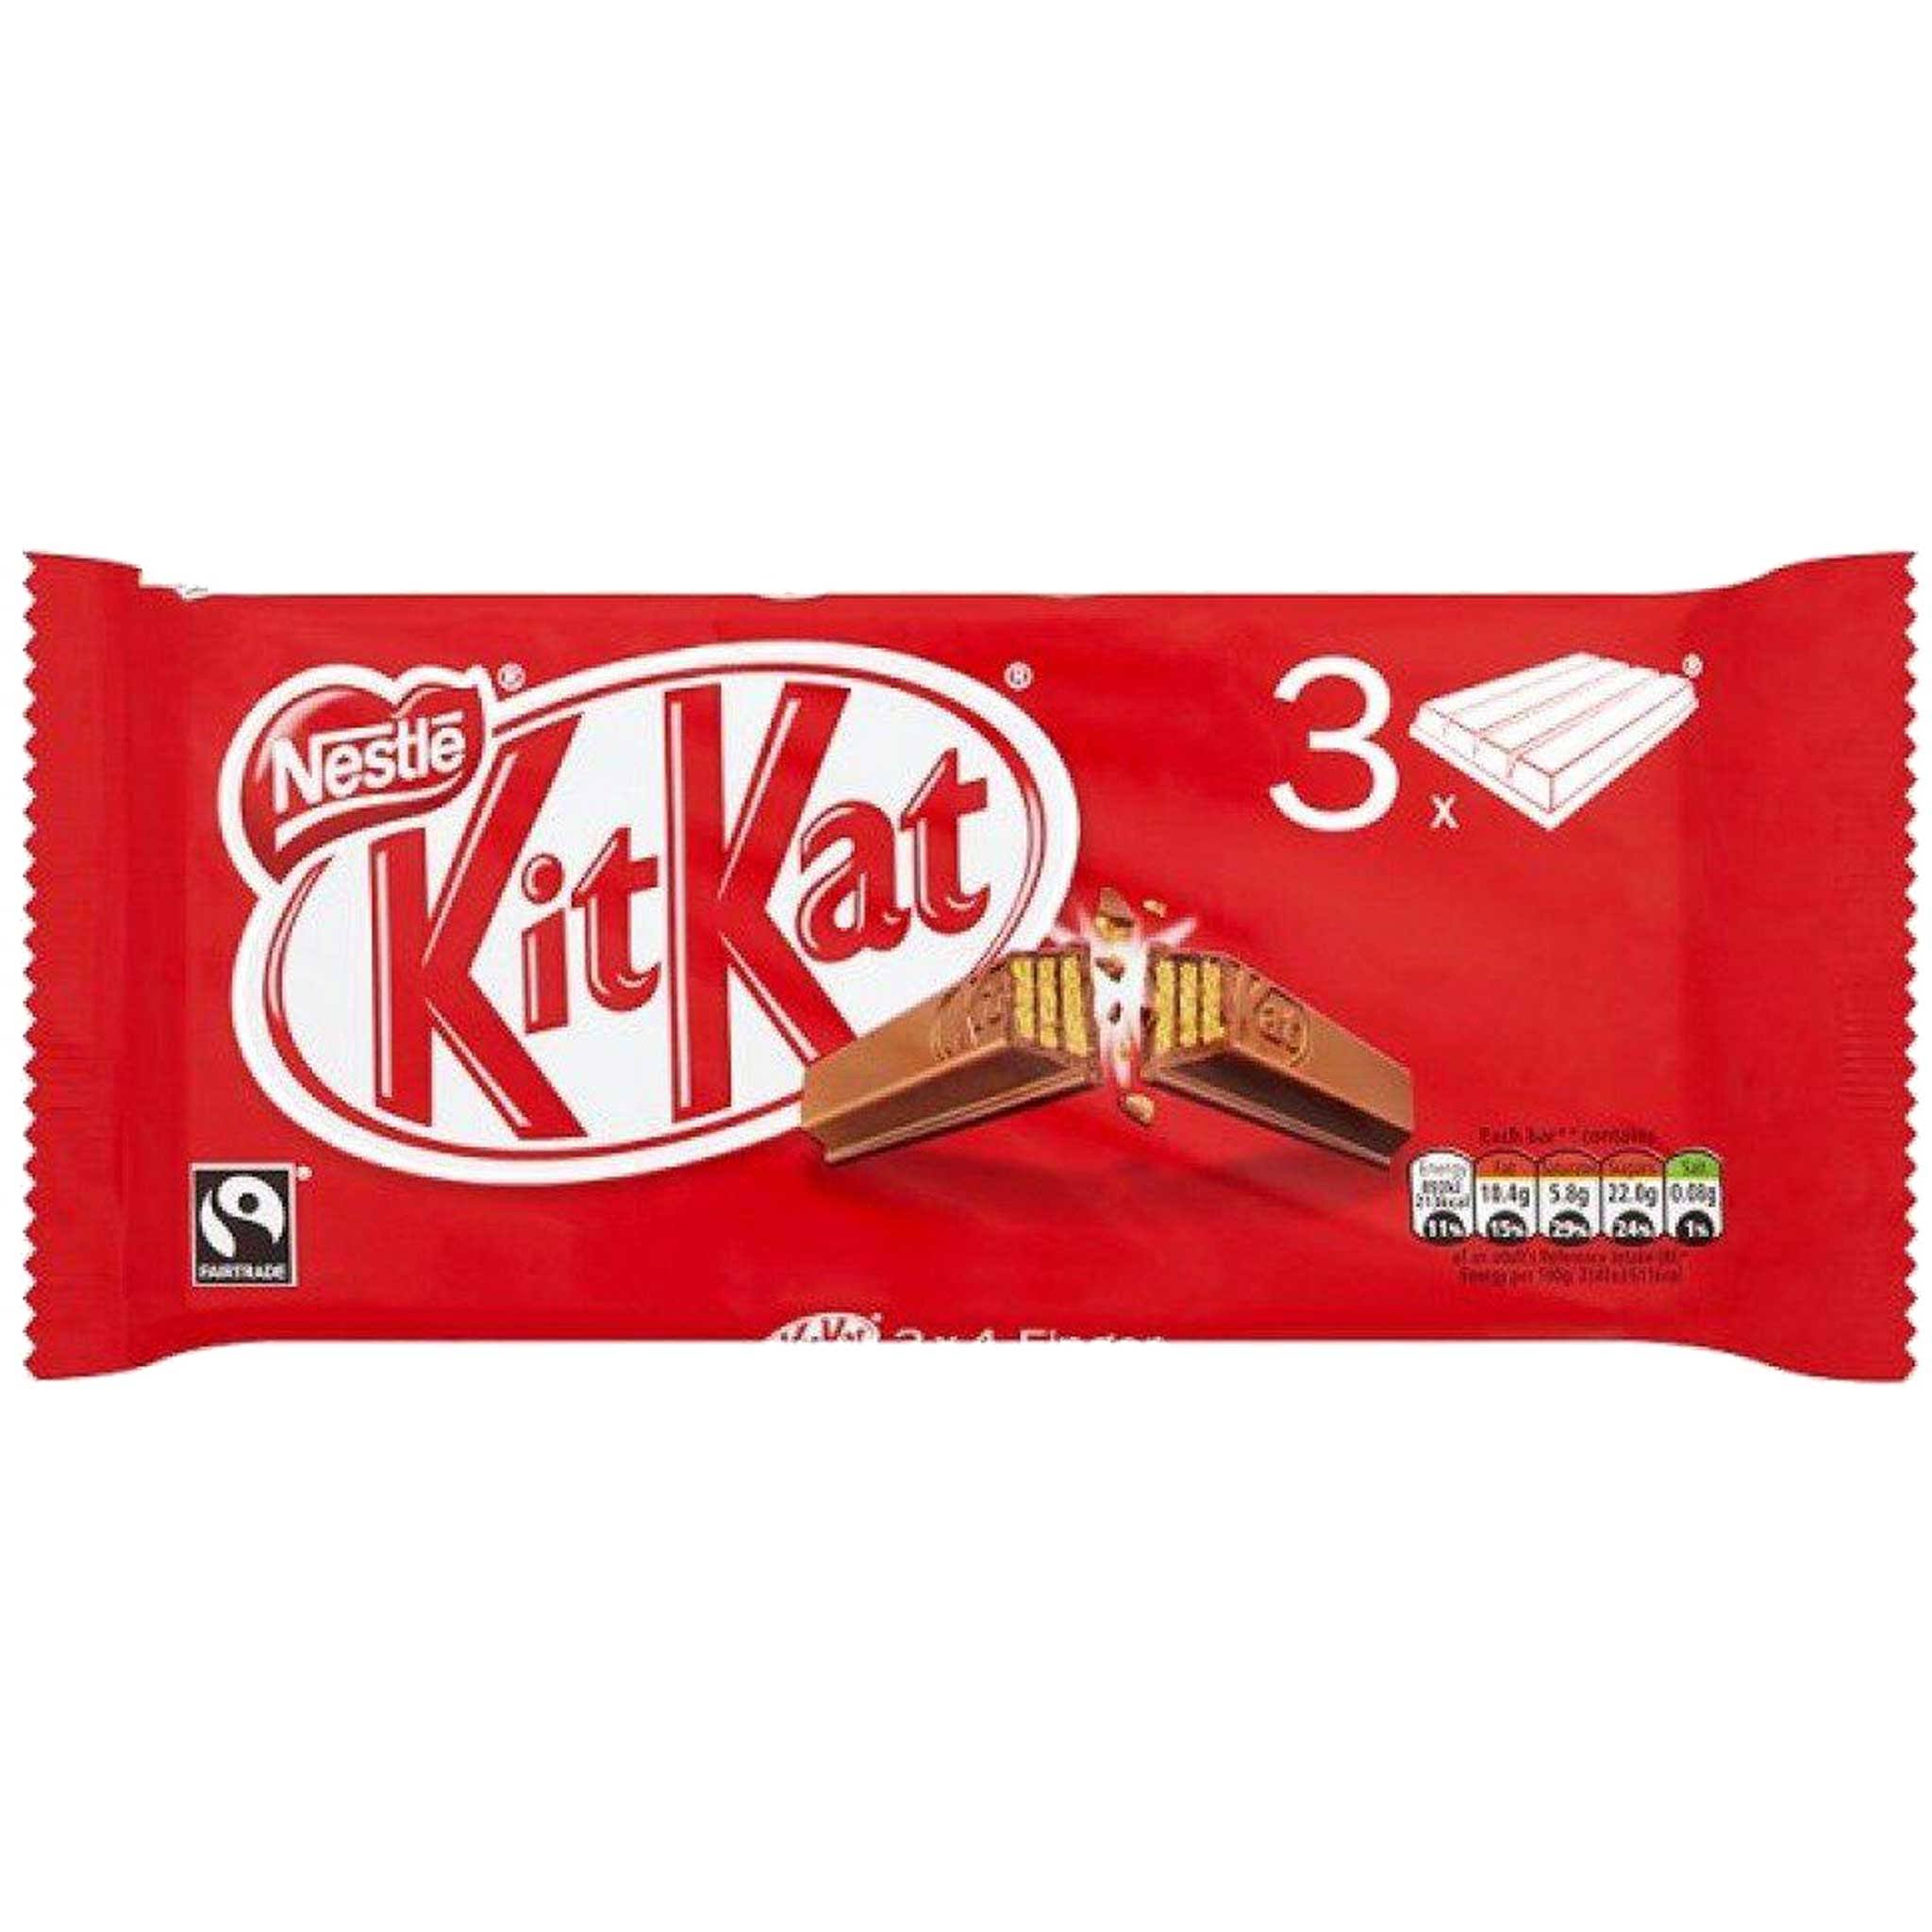 Kit Kat 4 Finger Milk Chocolate Bar - 41.5g, 3ct